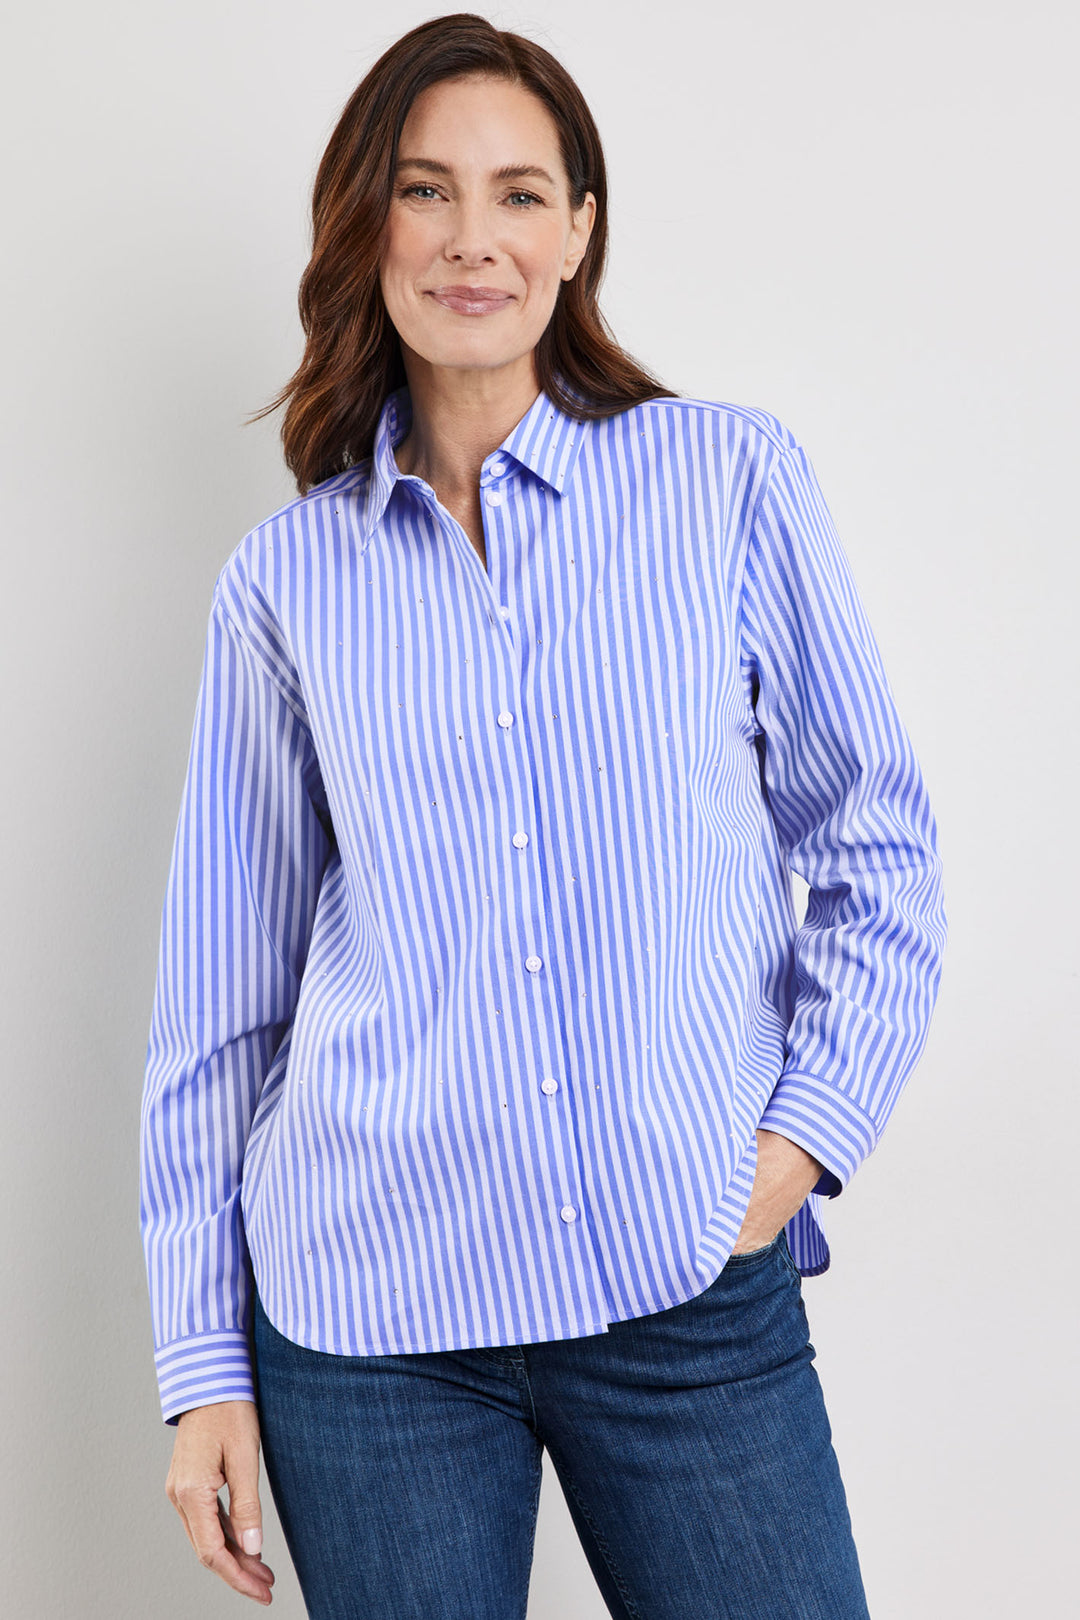 Gerry Weber 260026 Blue Stripe Embellished Shirt - Experience Boutique